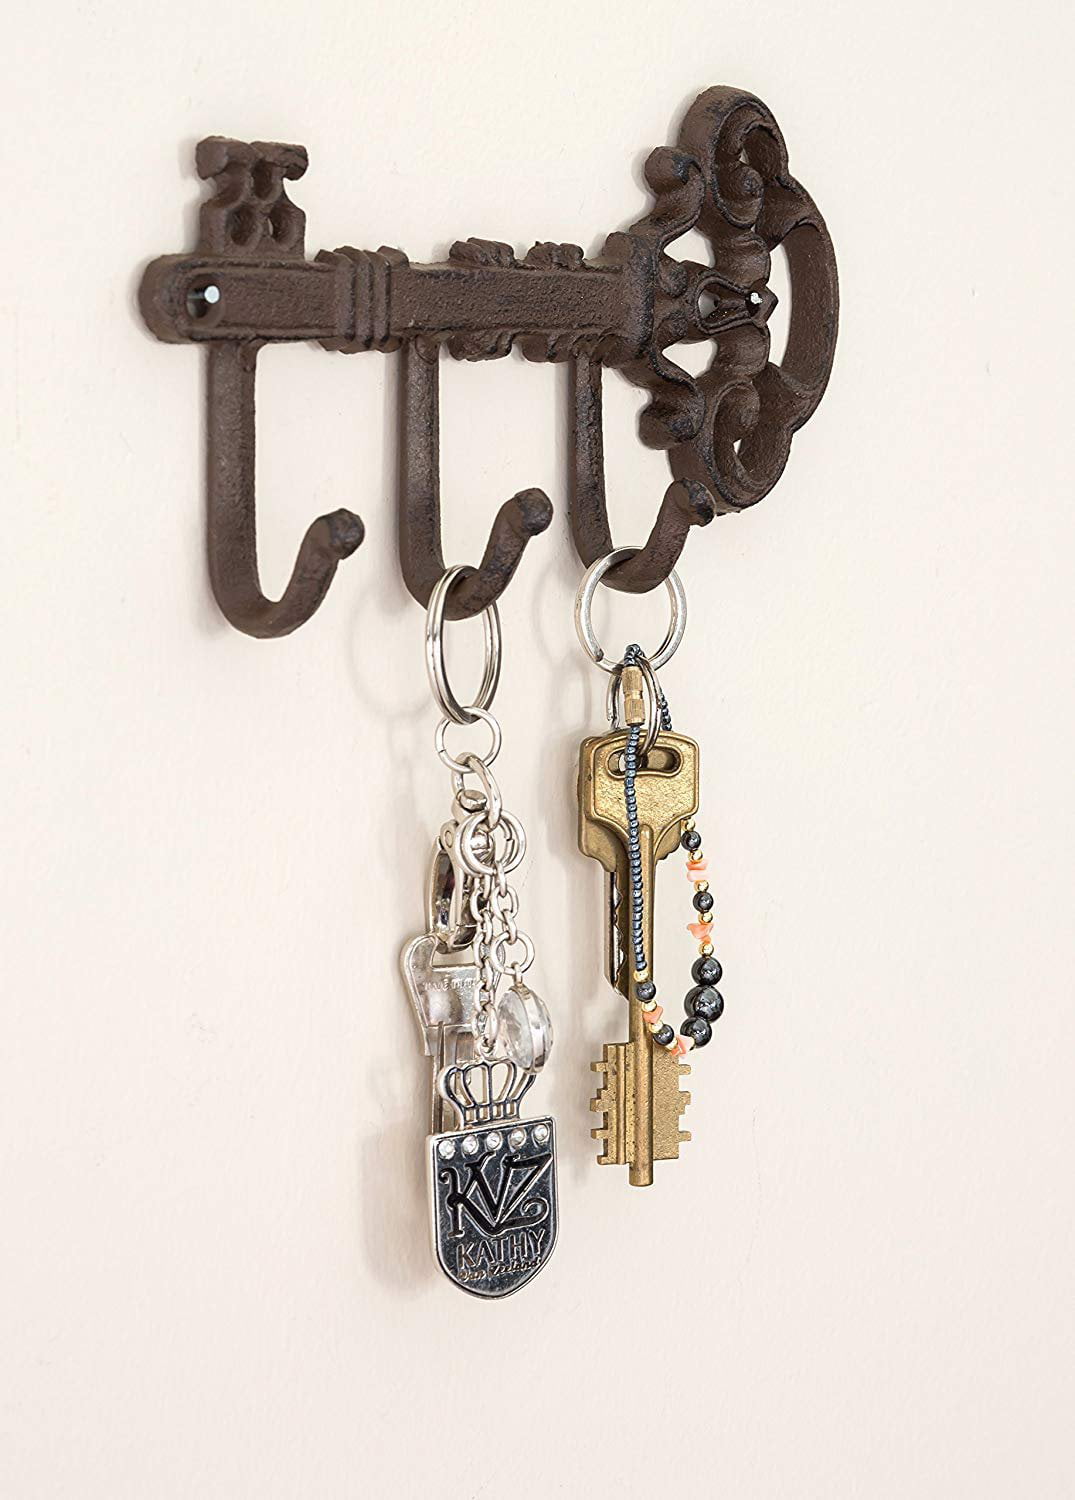 Decorative Scroll Metal Art Wall Key Rack Hanger Holder K05-6 inch wide Small 